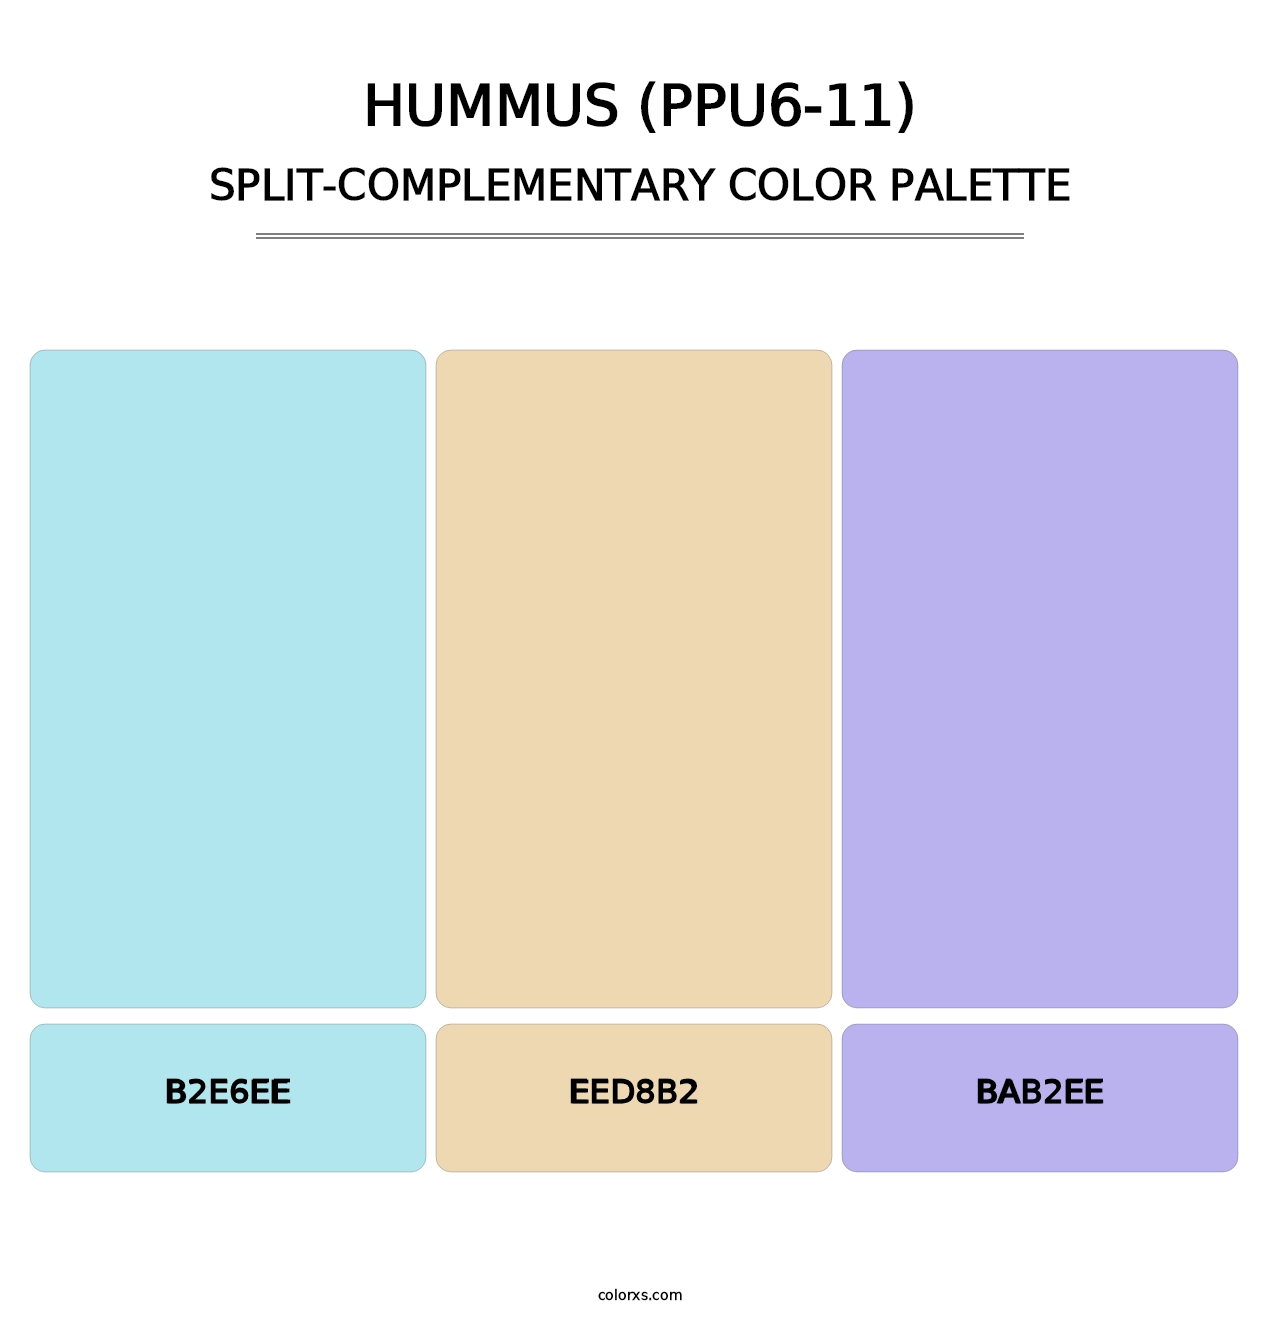 Hummus (PPU6-11) - Split-Complementary Color Palette